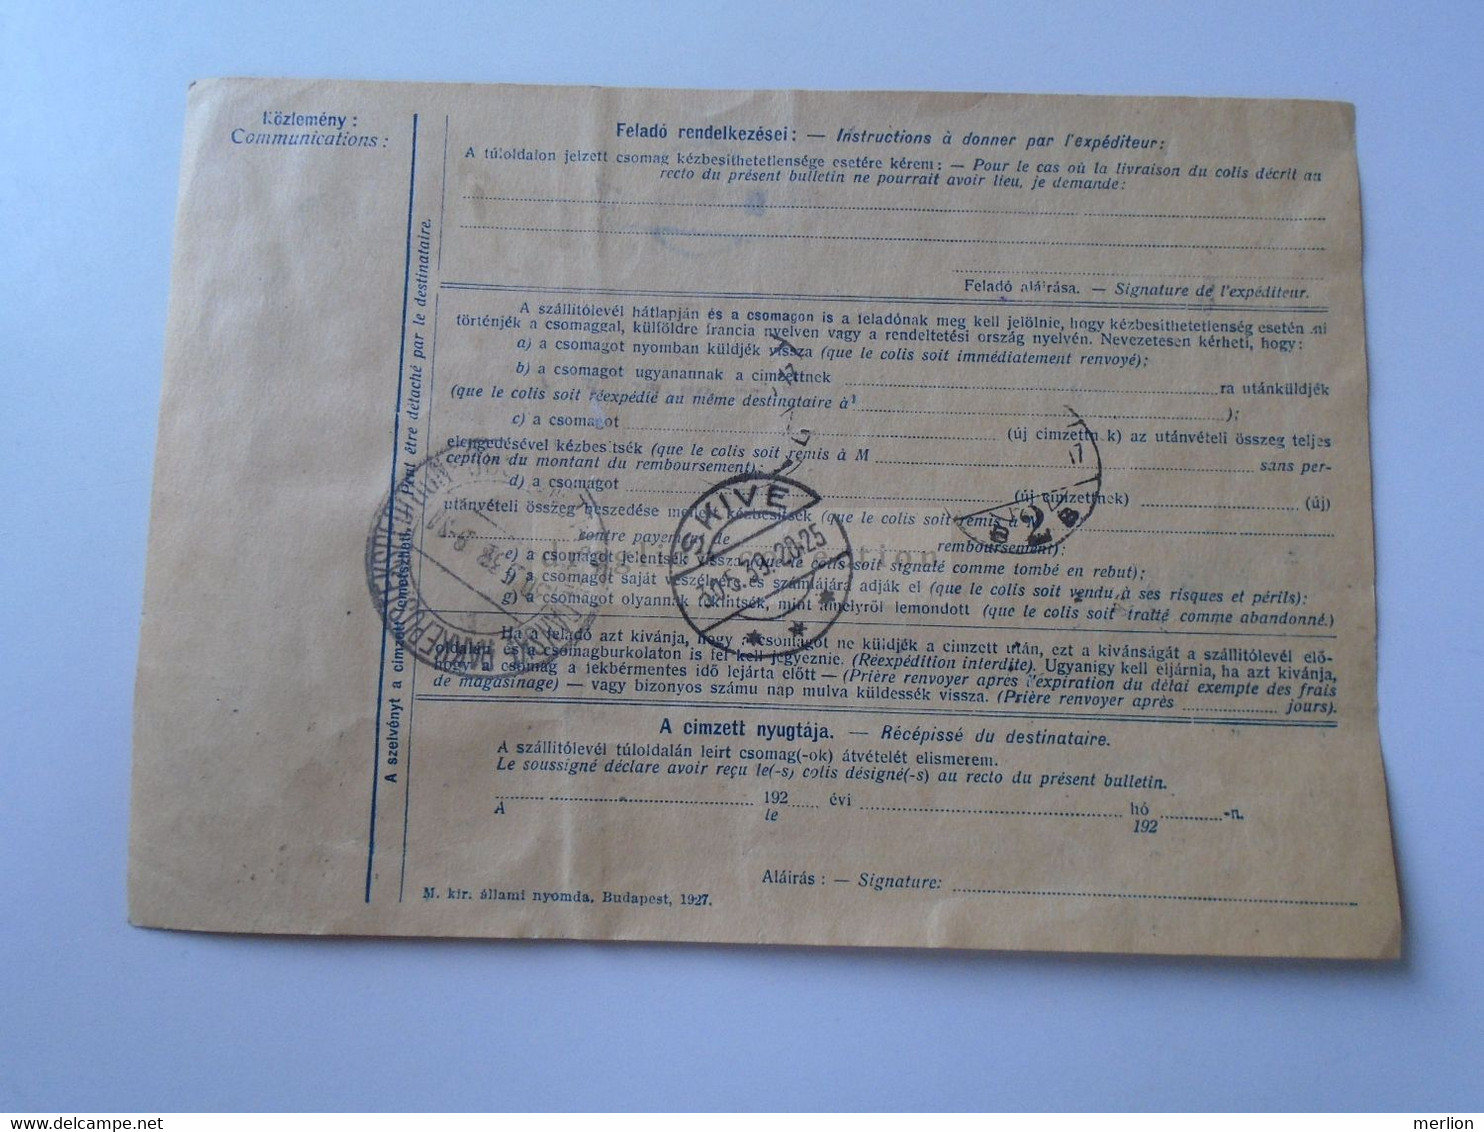 ZS68.10 HUNGARY  Postai szallitólevél, Bulletin d' expedition-1939-sent to SKIVE Denmark-cancel Budapest Wien Flensburg